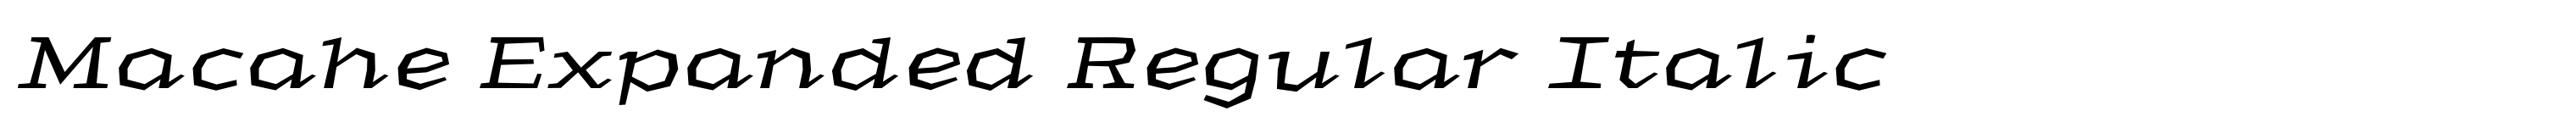 Macahe Expanded Regular Italic